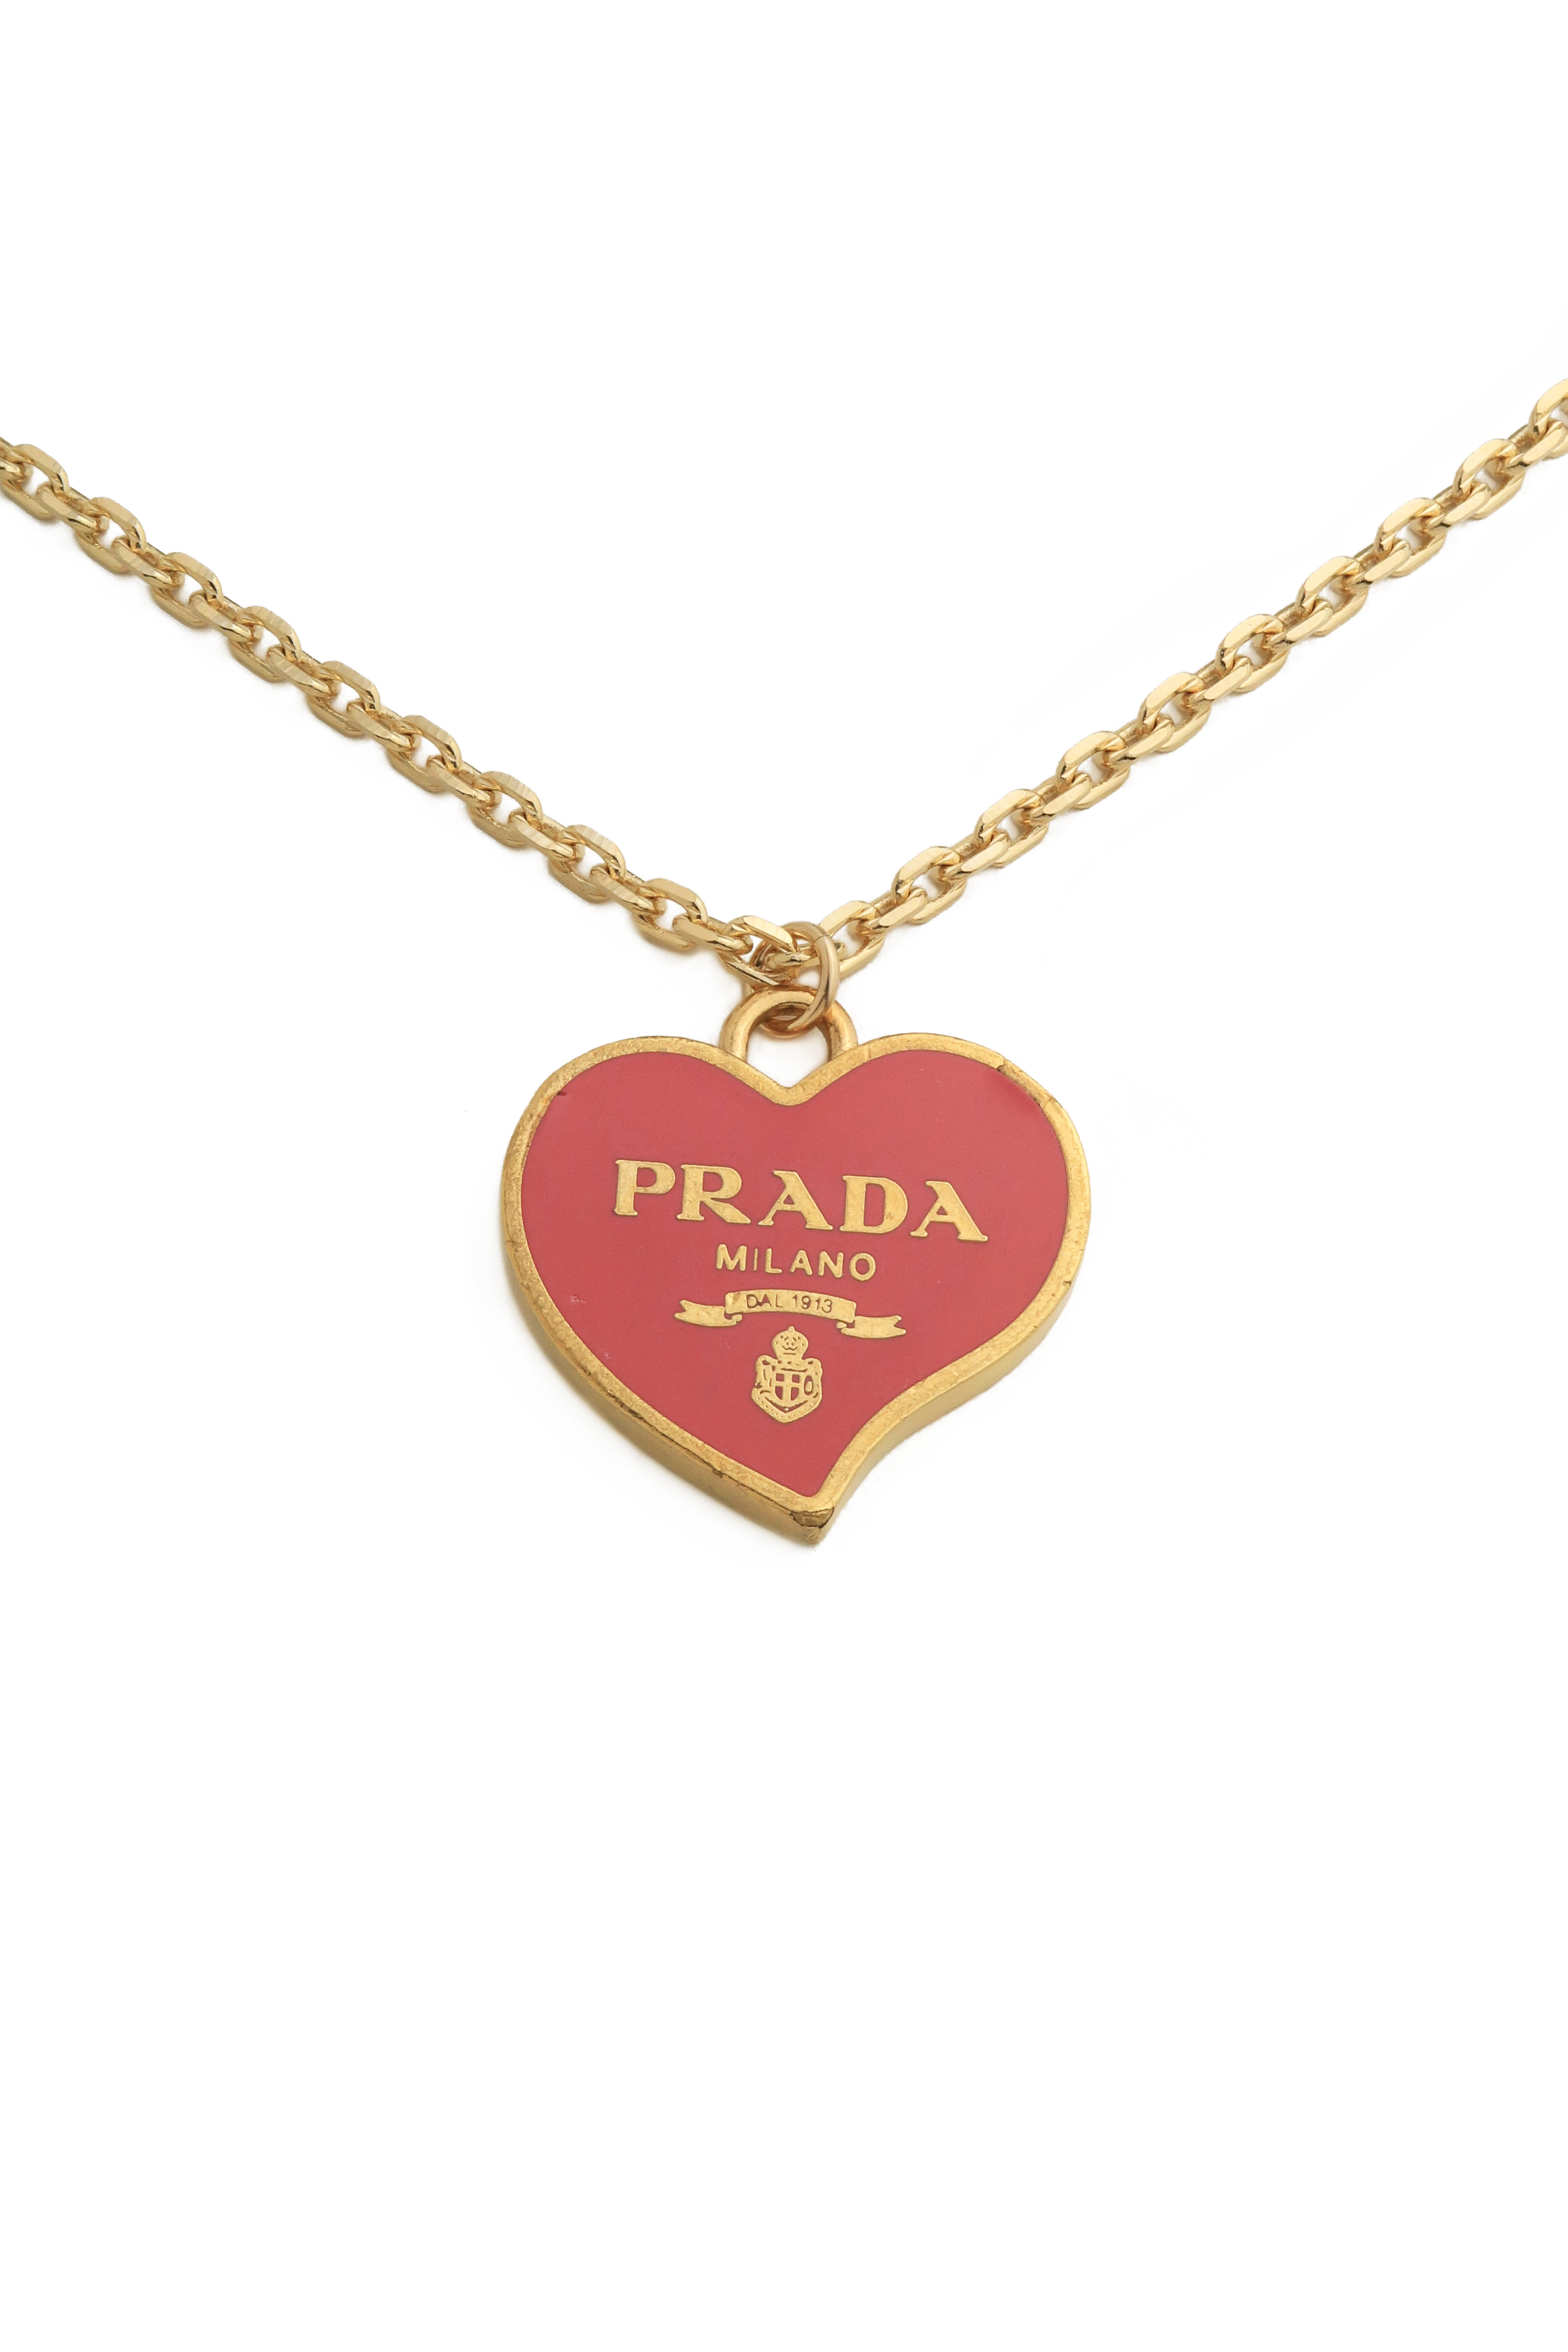 prada+pink+large+heart+necklace+wbg